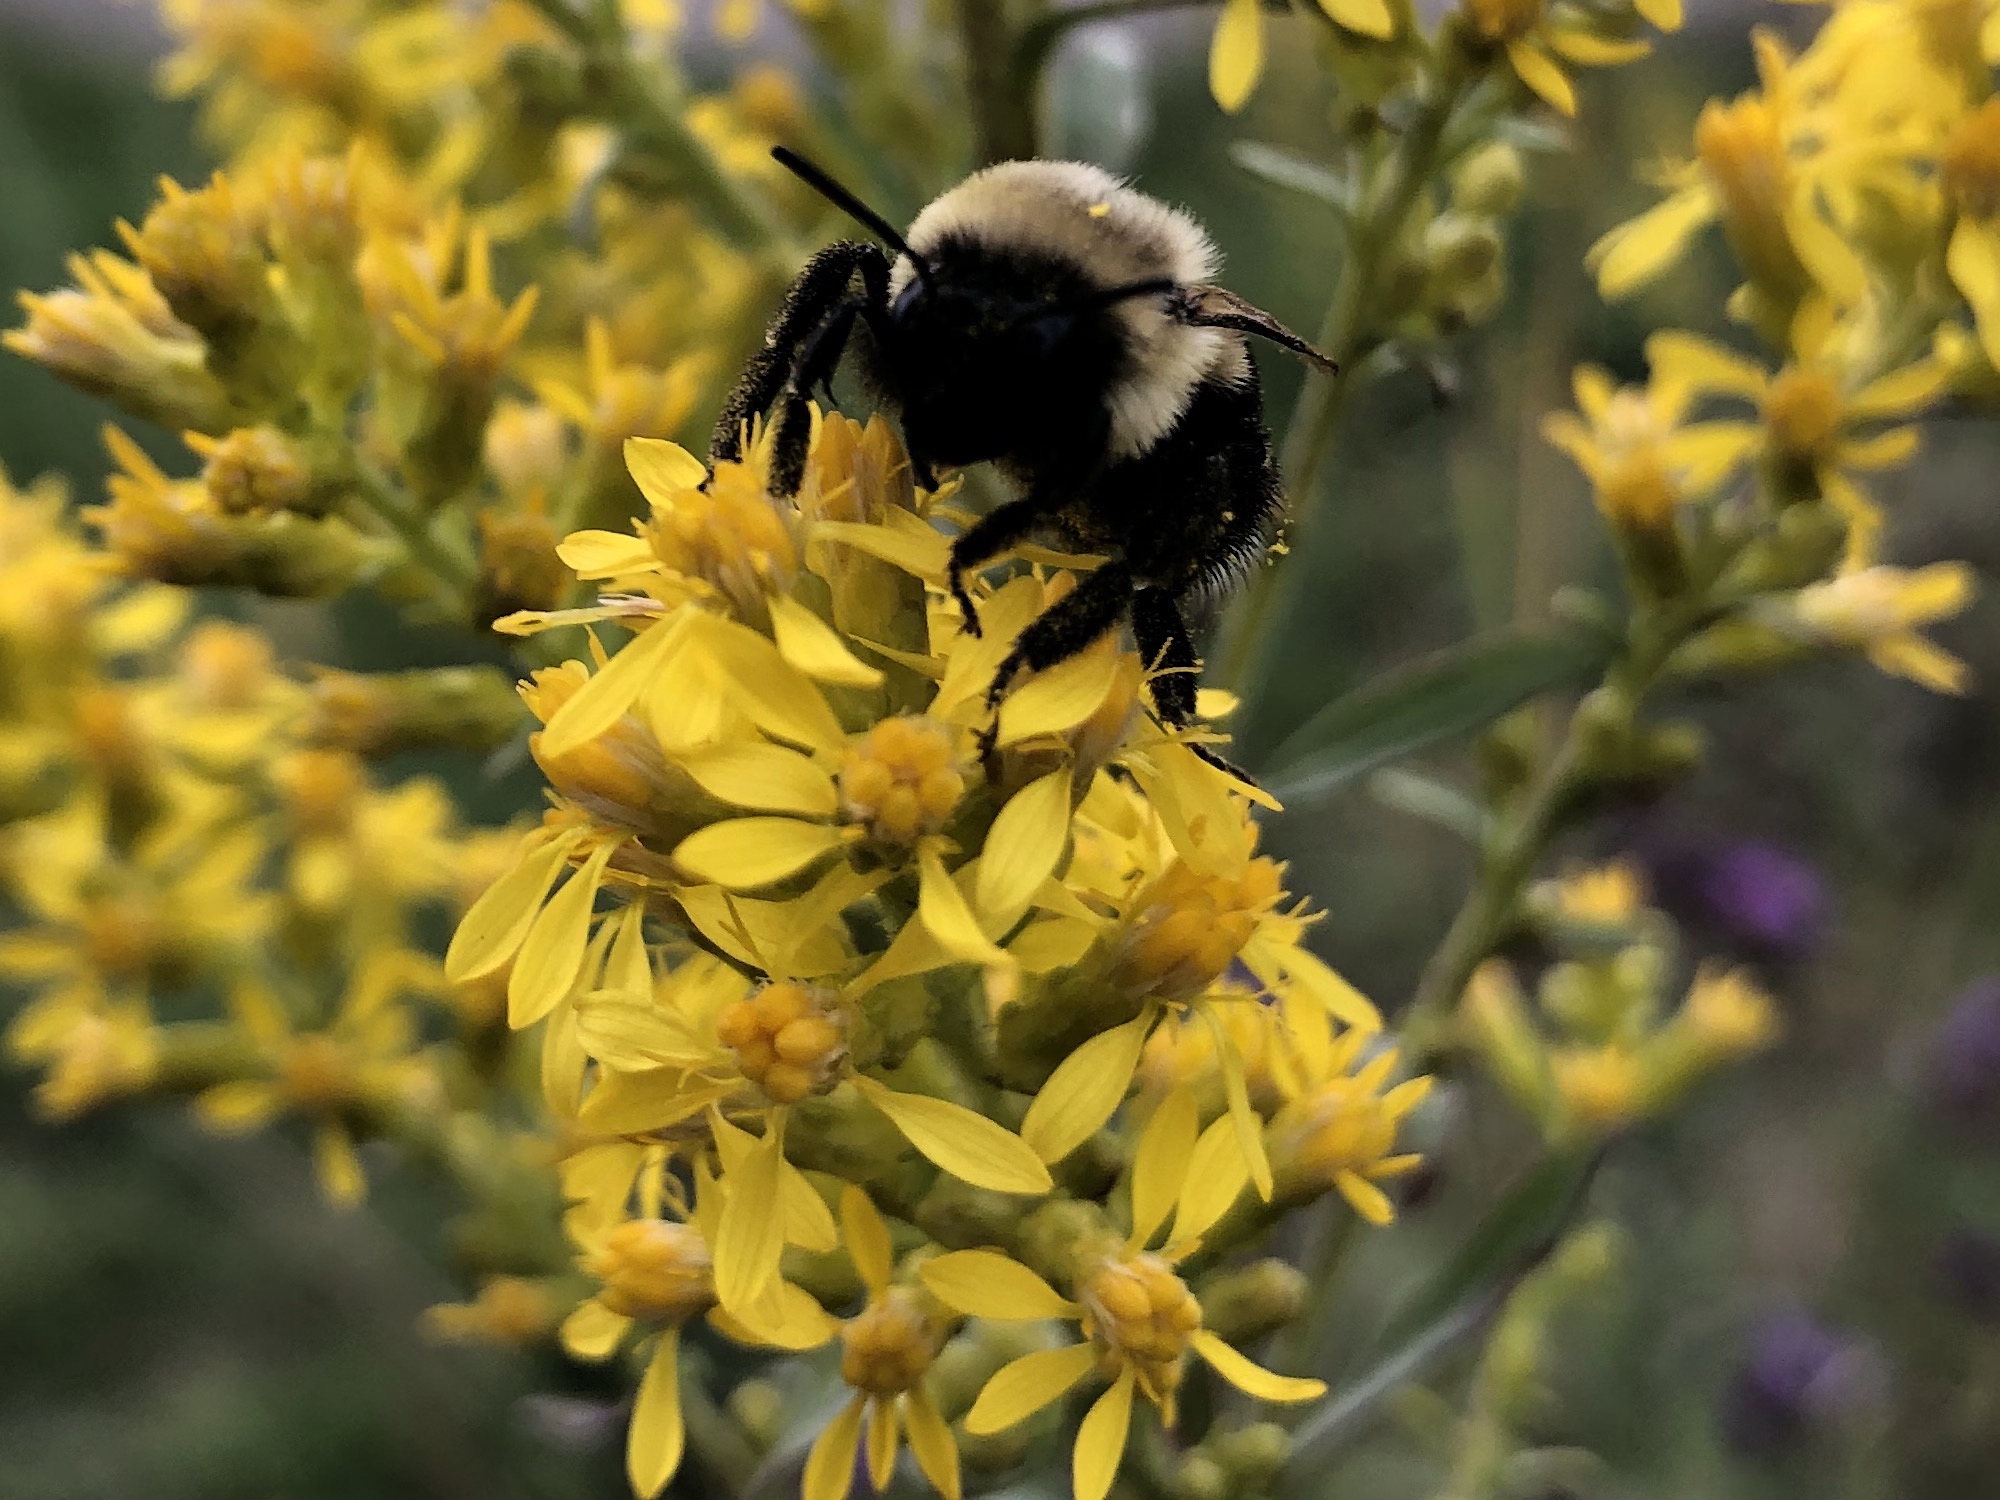 Bumblebee on Showy Goldenrod on September 30, 2020 October 2, 2020.